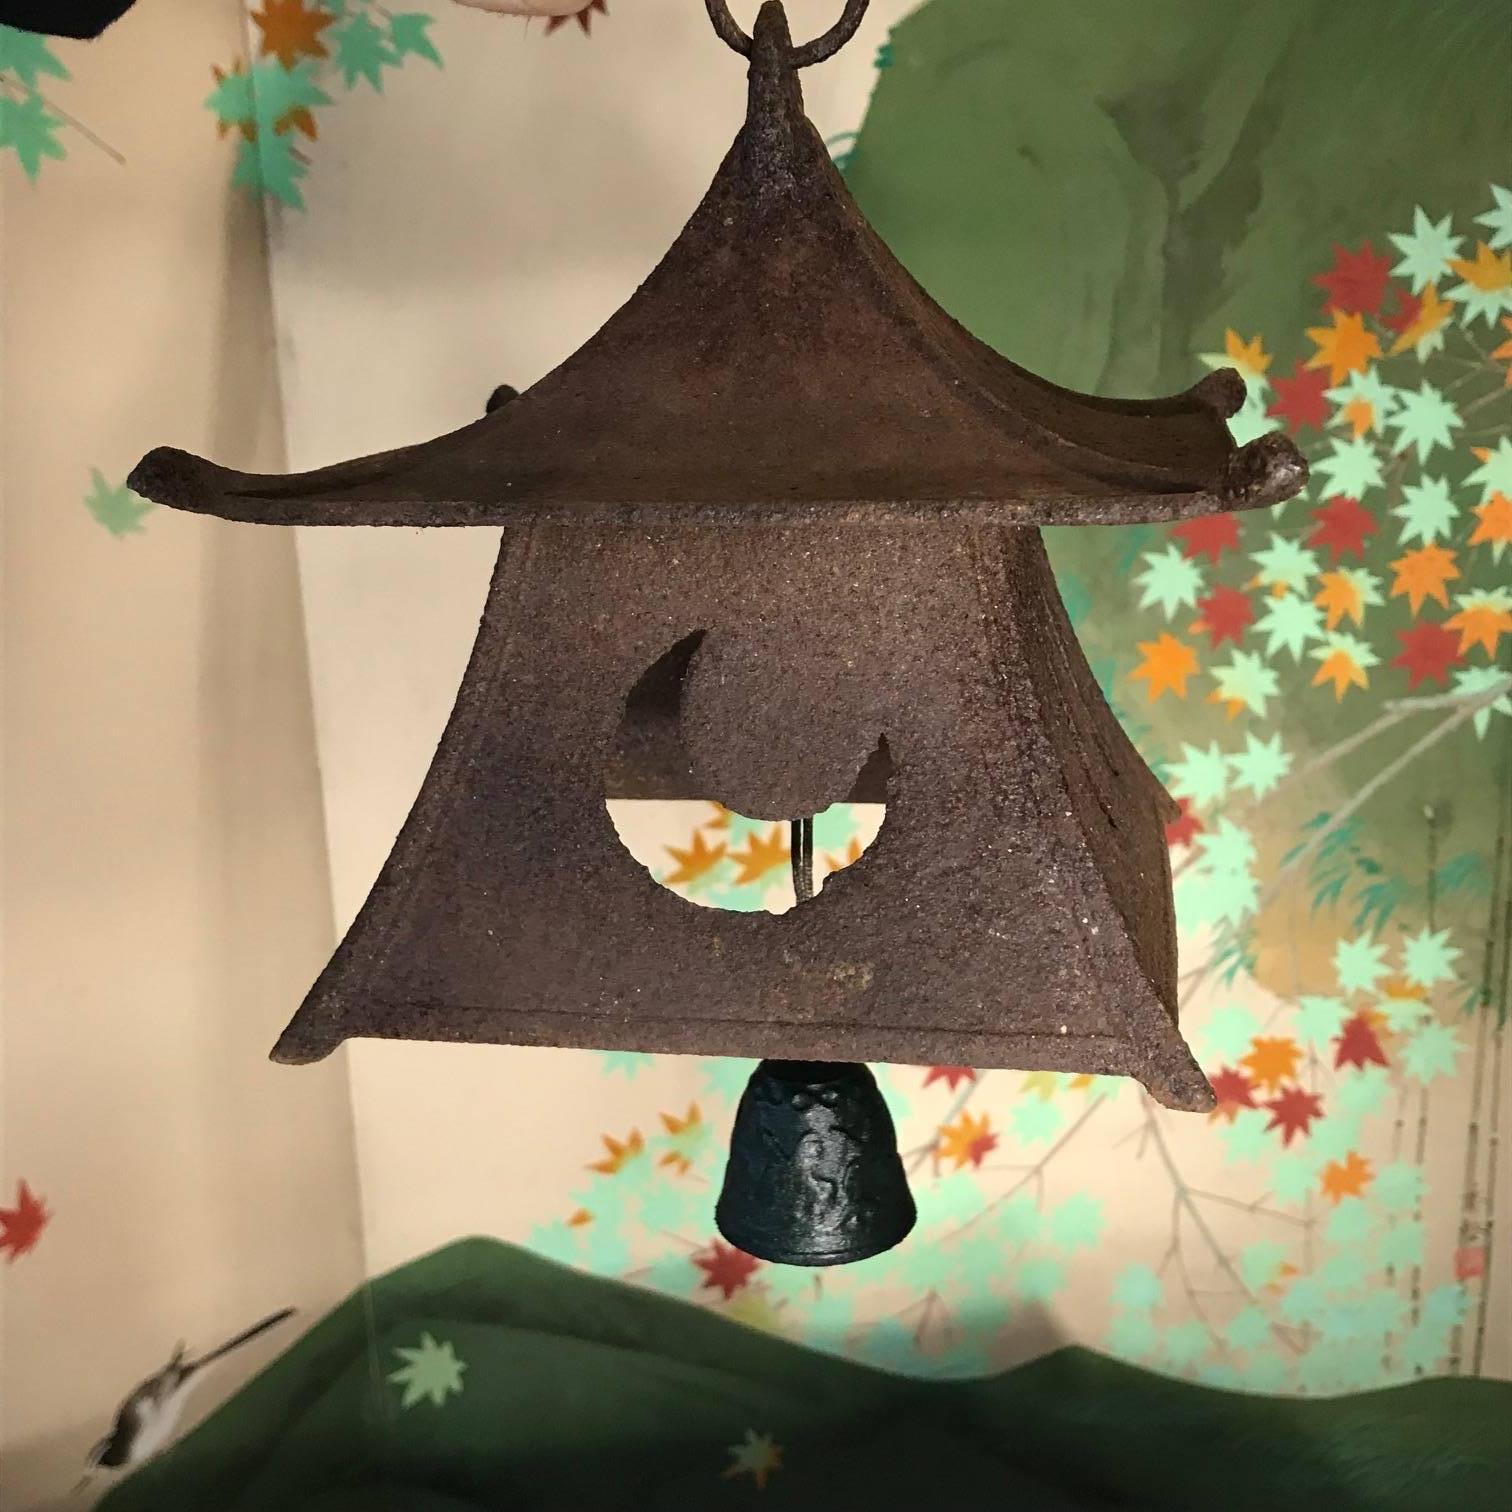 Showa Japanese Large Old Lantern and Wind Chime